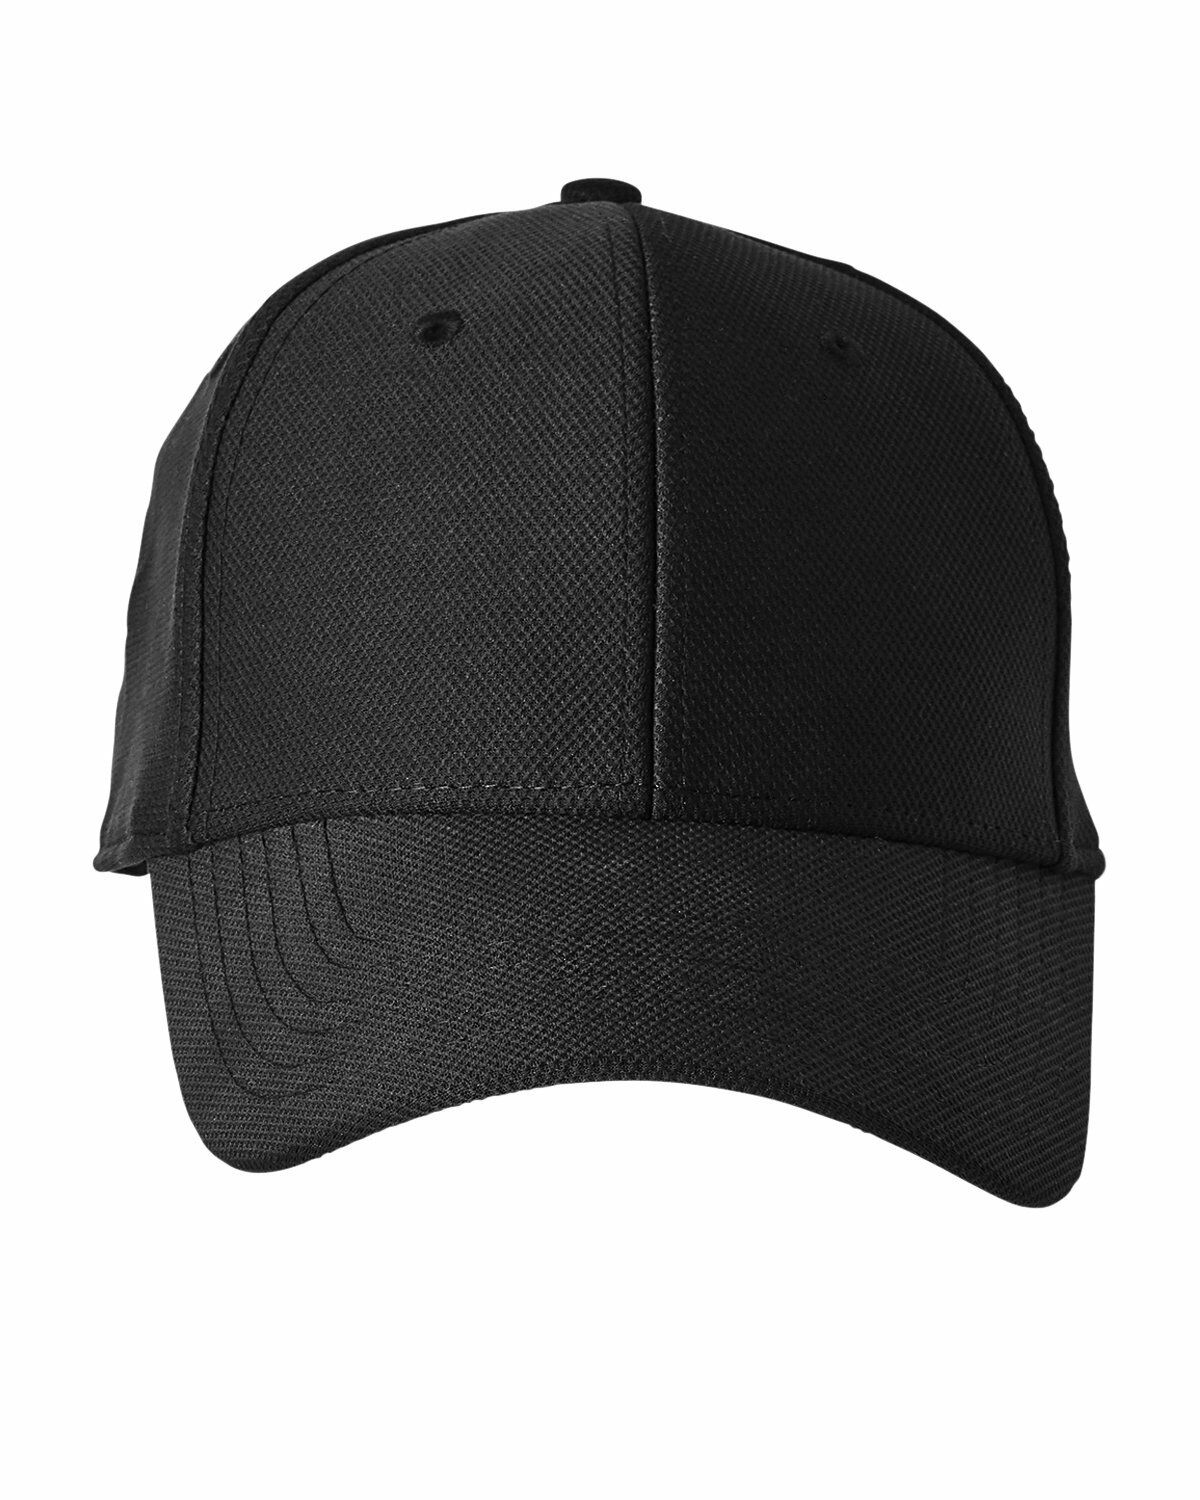 Custom Branded Under Armour Hats - Black